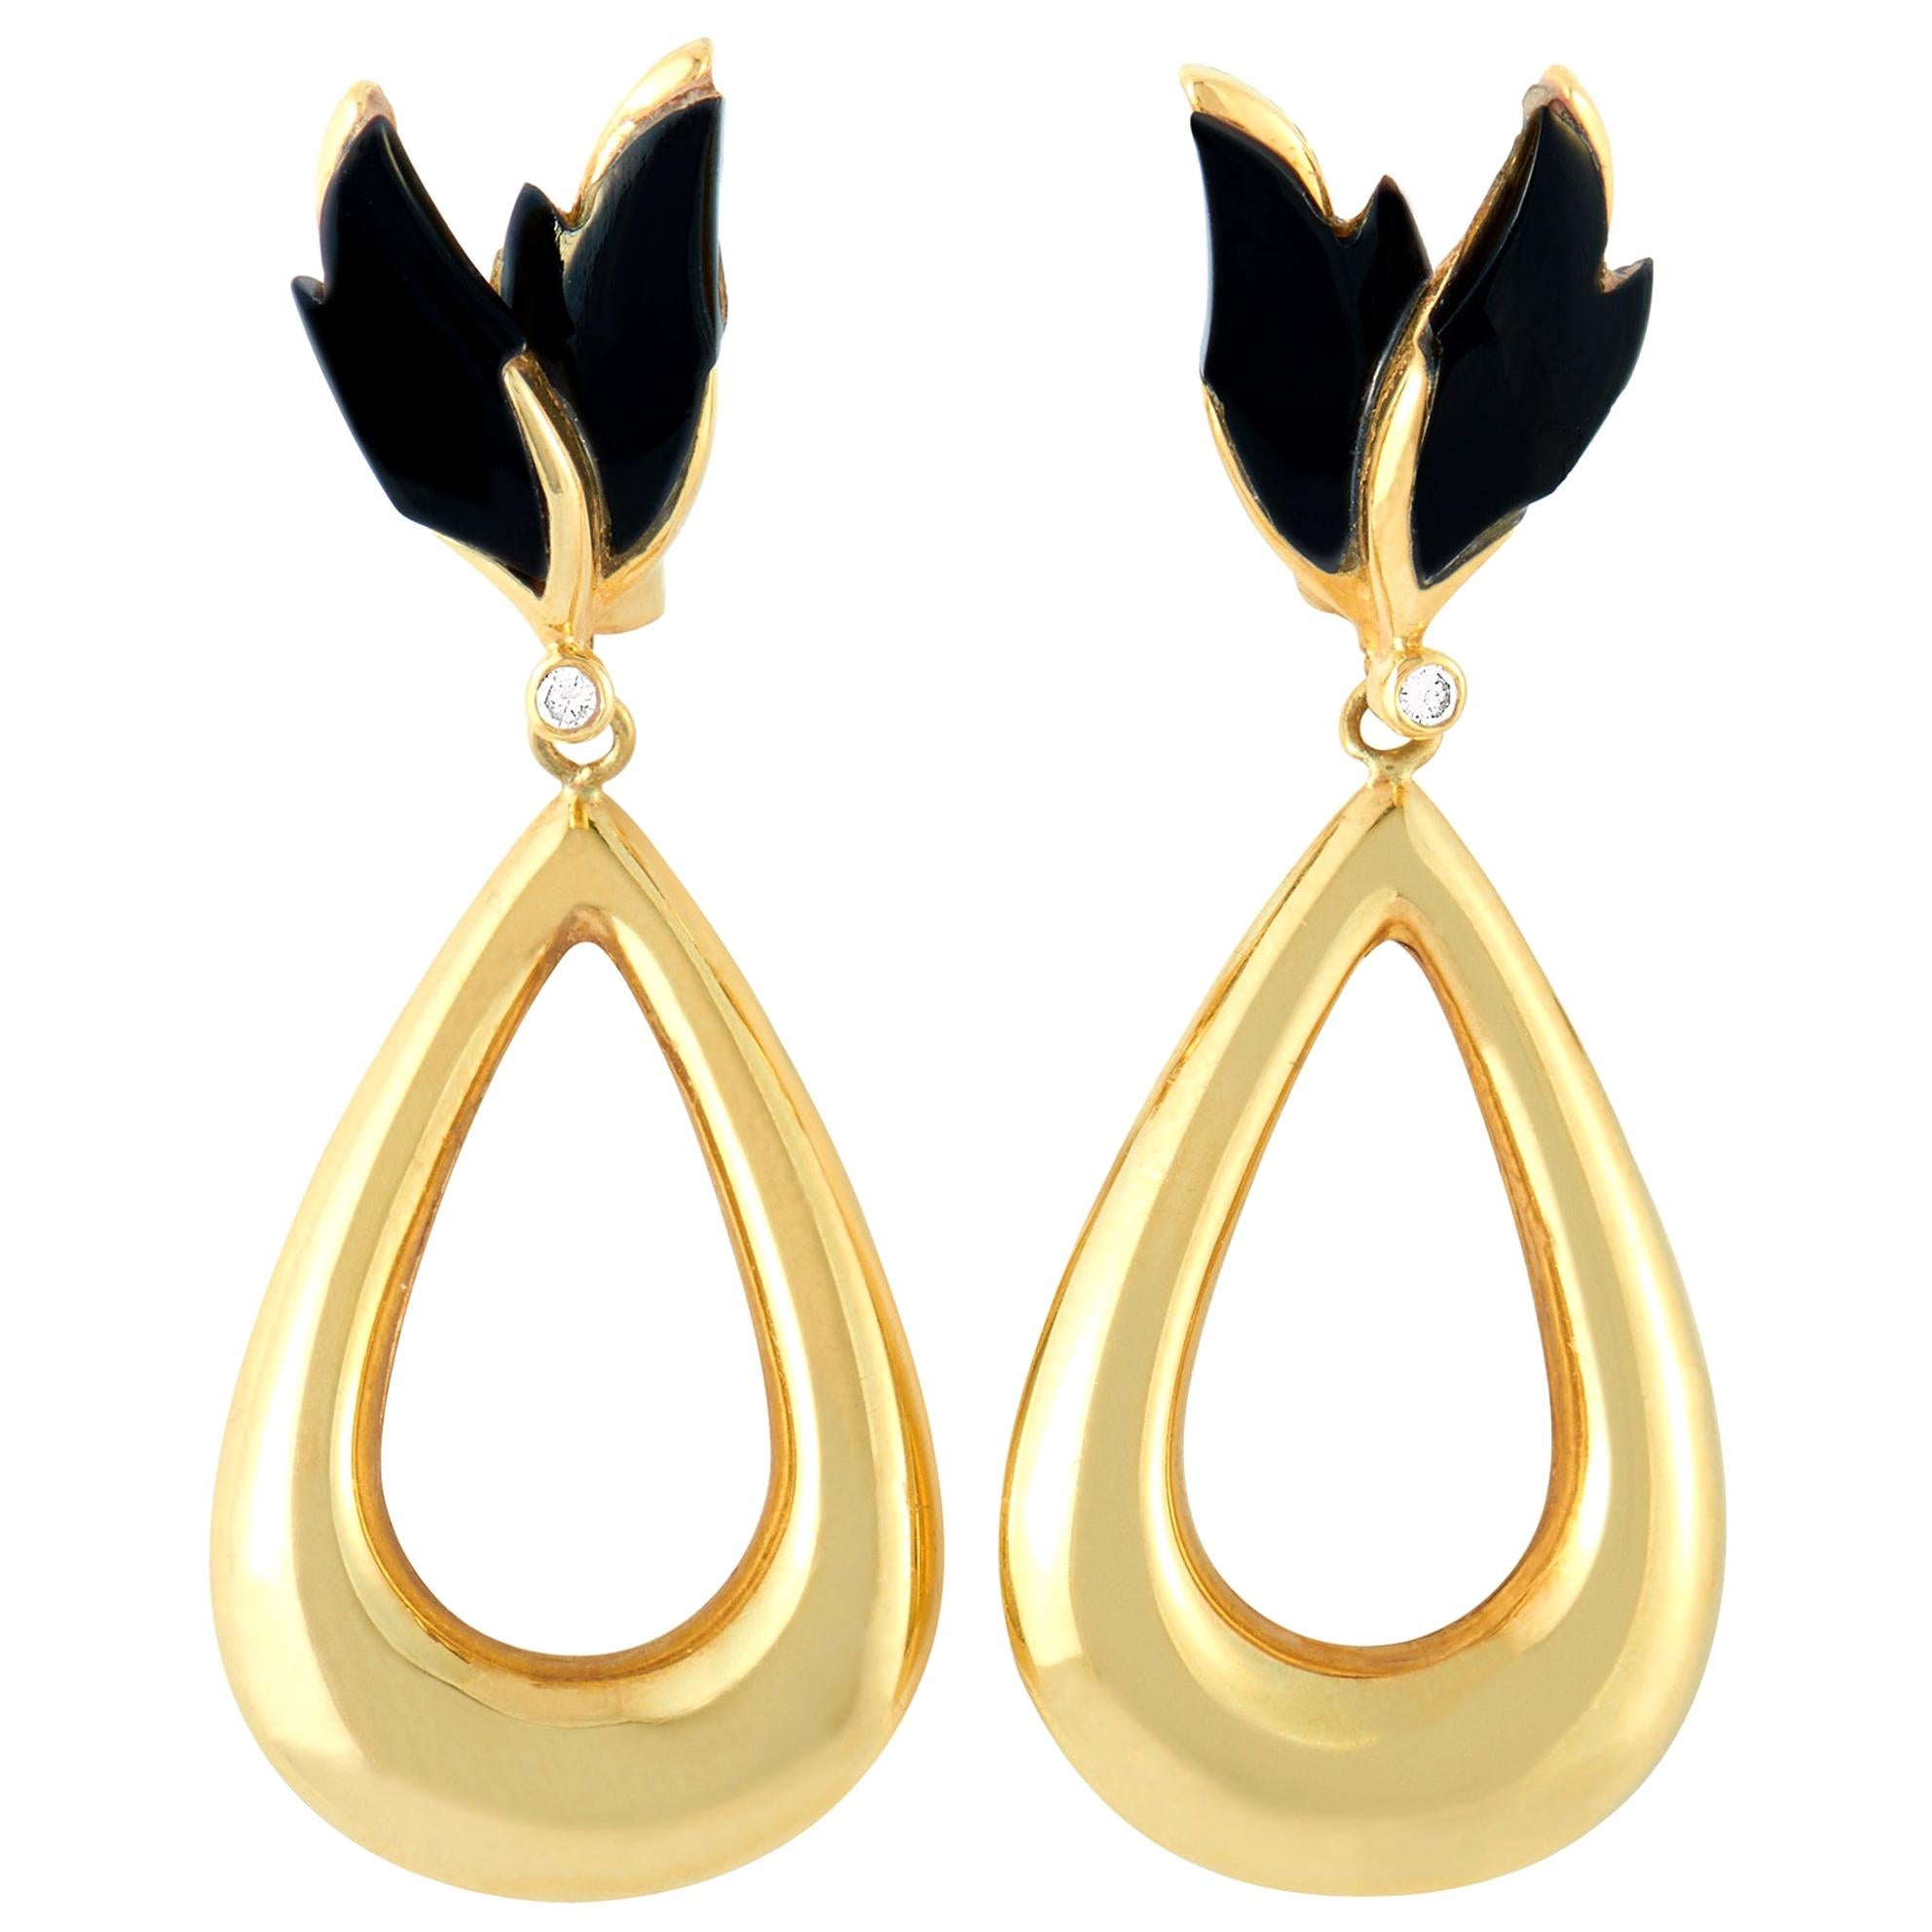 Carrera y Carrera 18 Karat Yellow Gold Diamond and Onyx Earrings